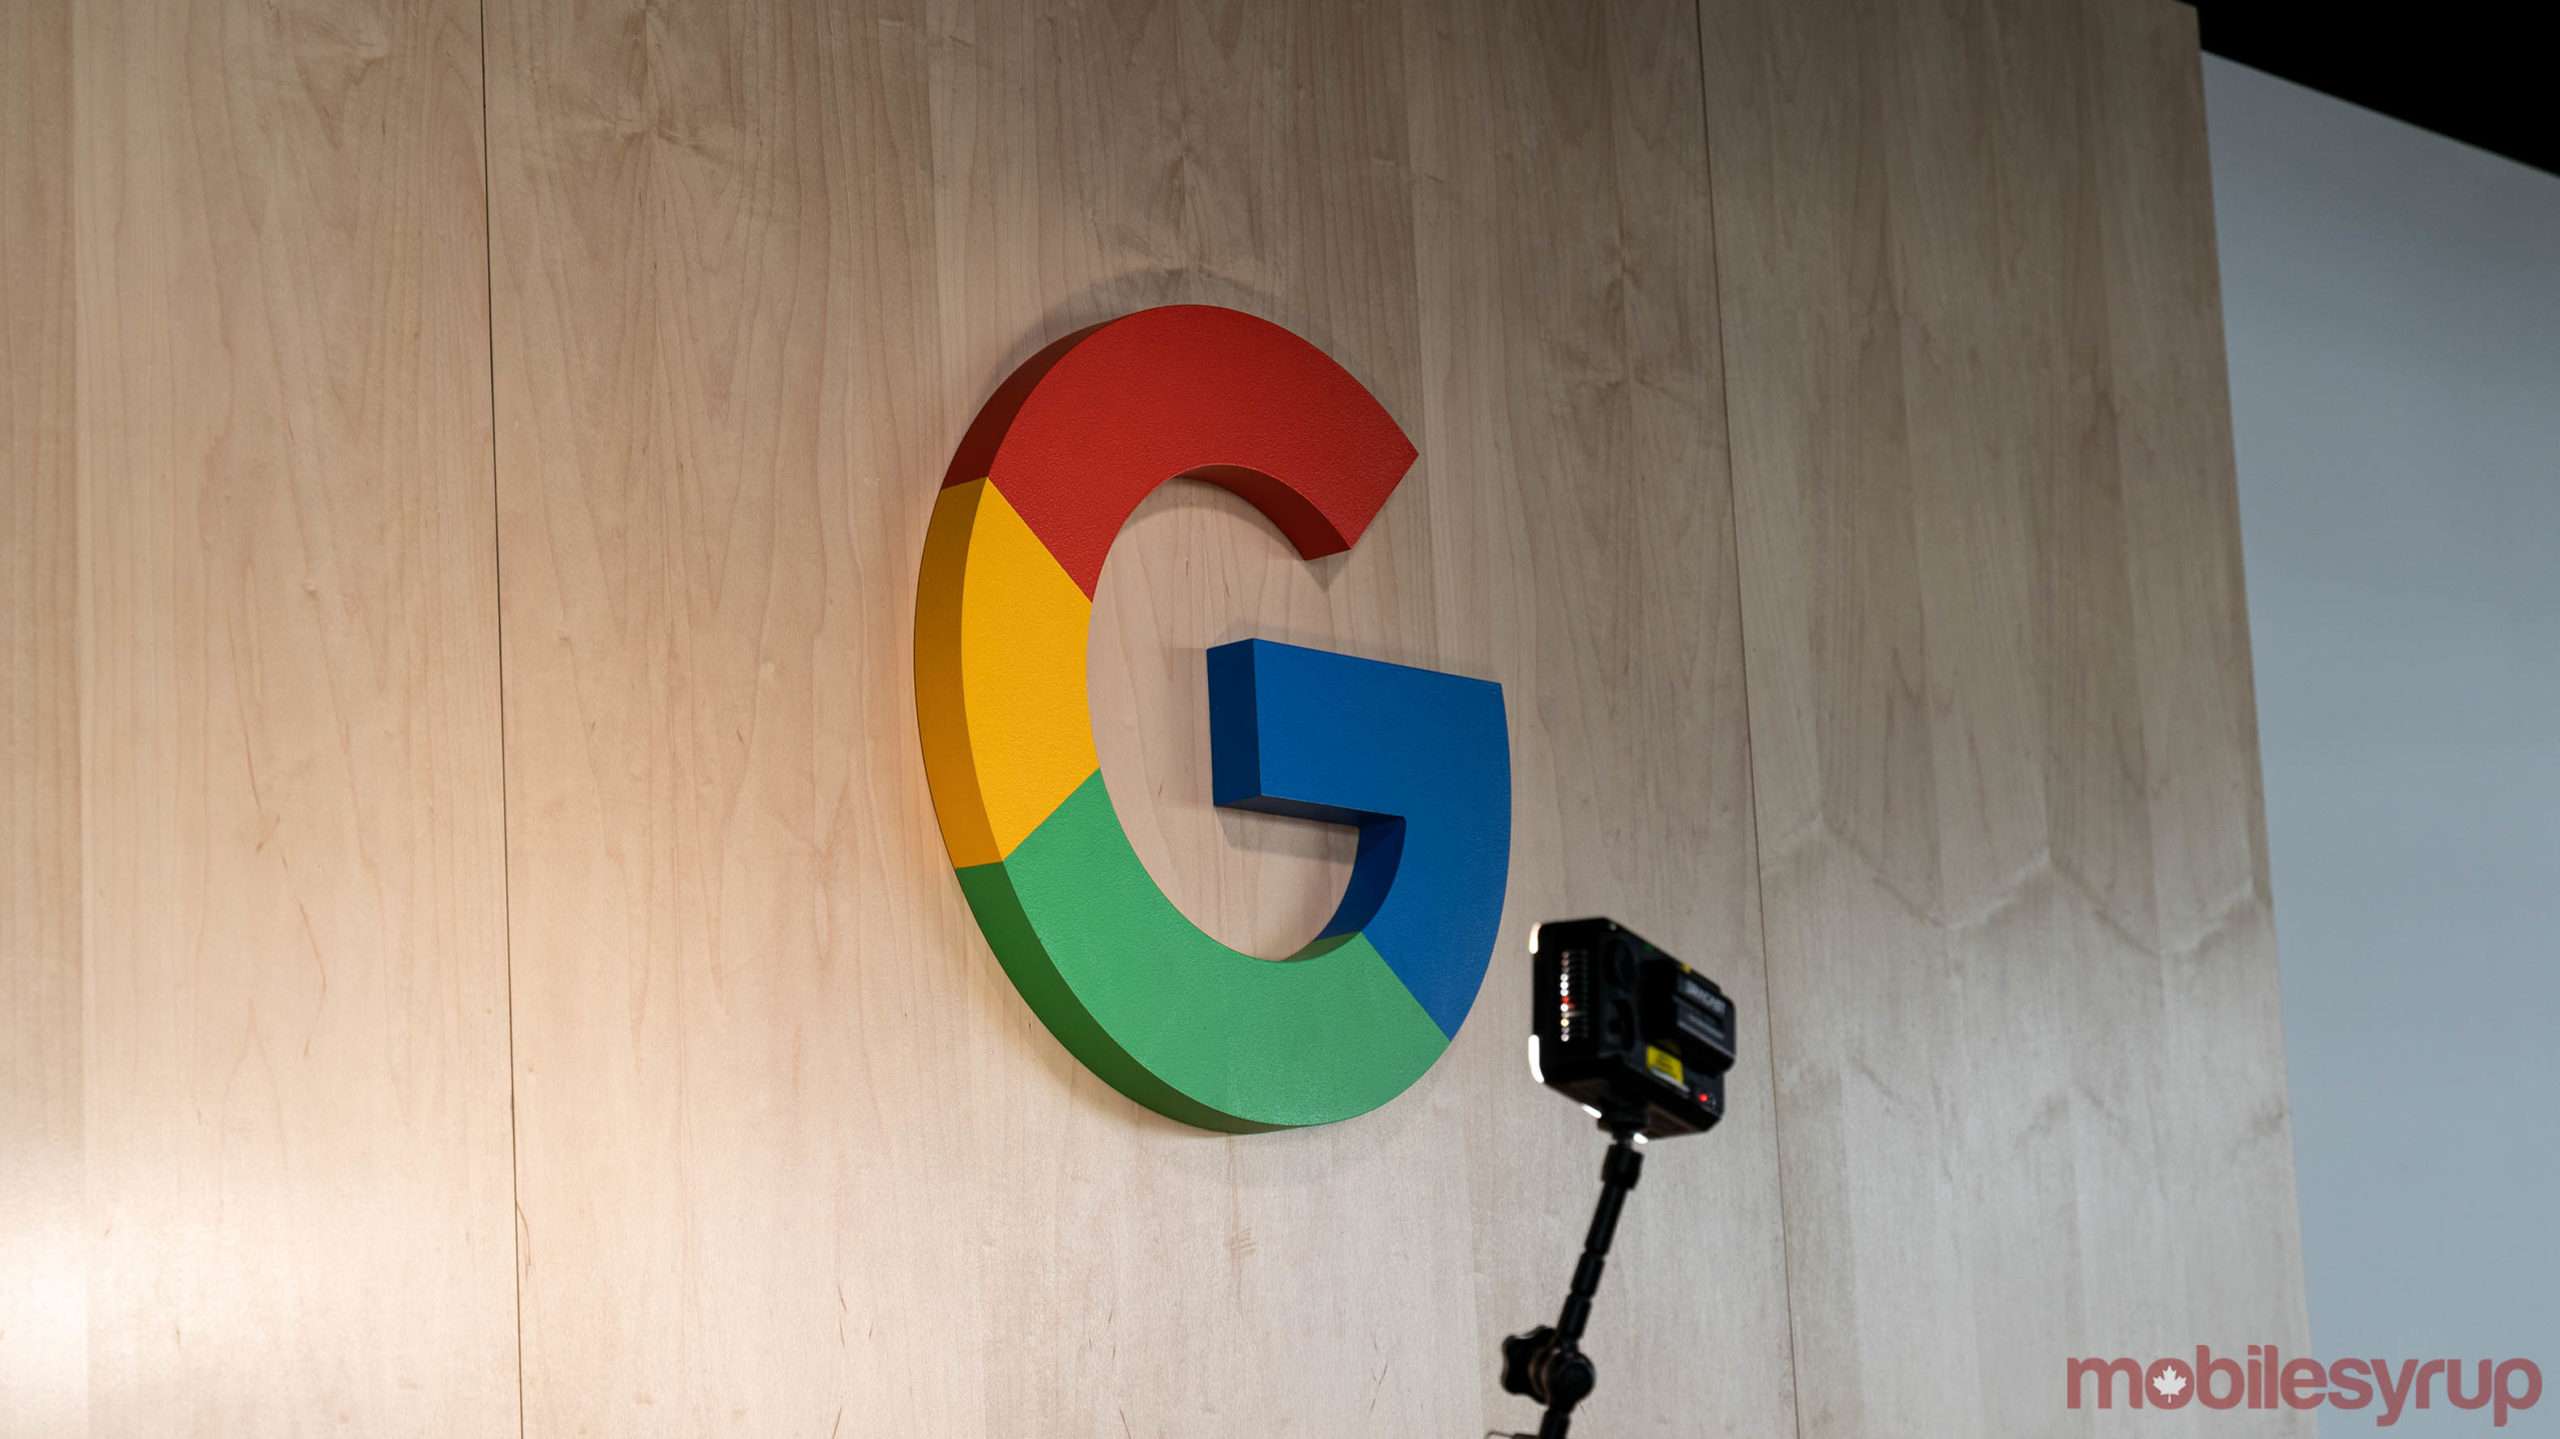 Google 'G' logo